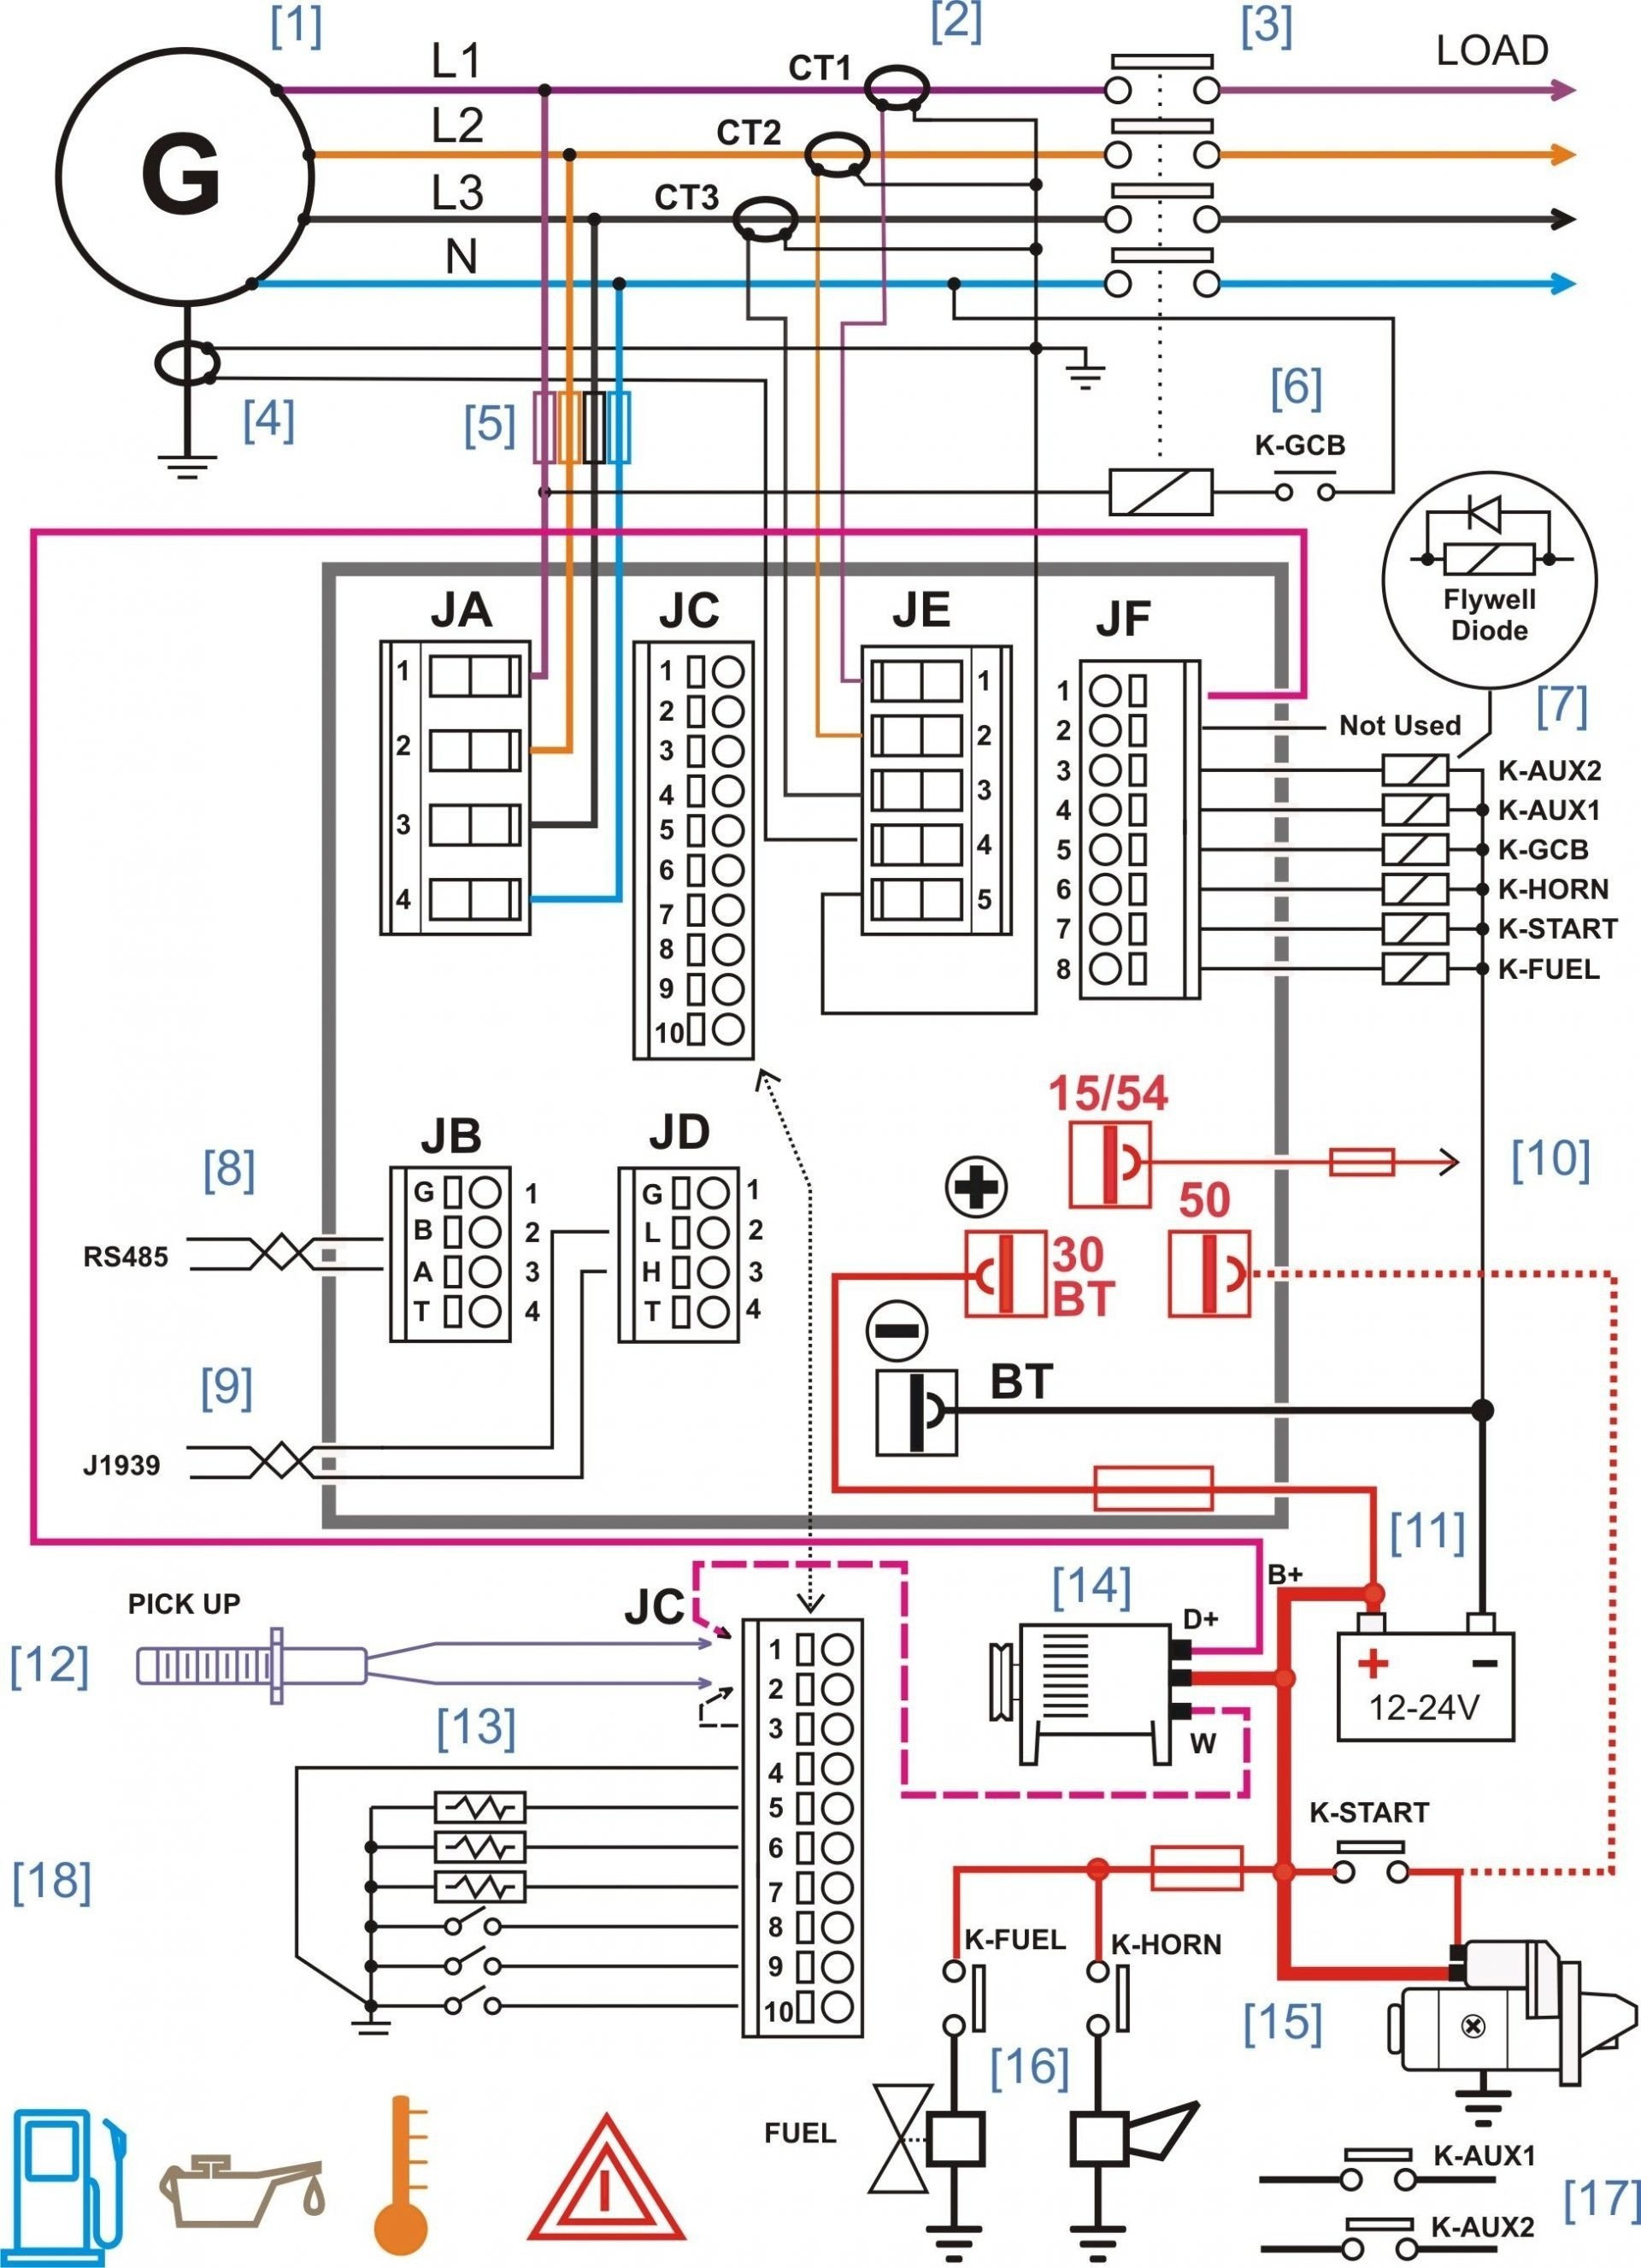 Fitech Wiring Diagram